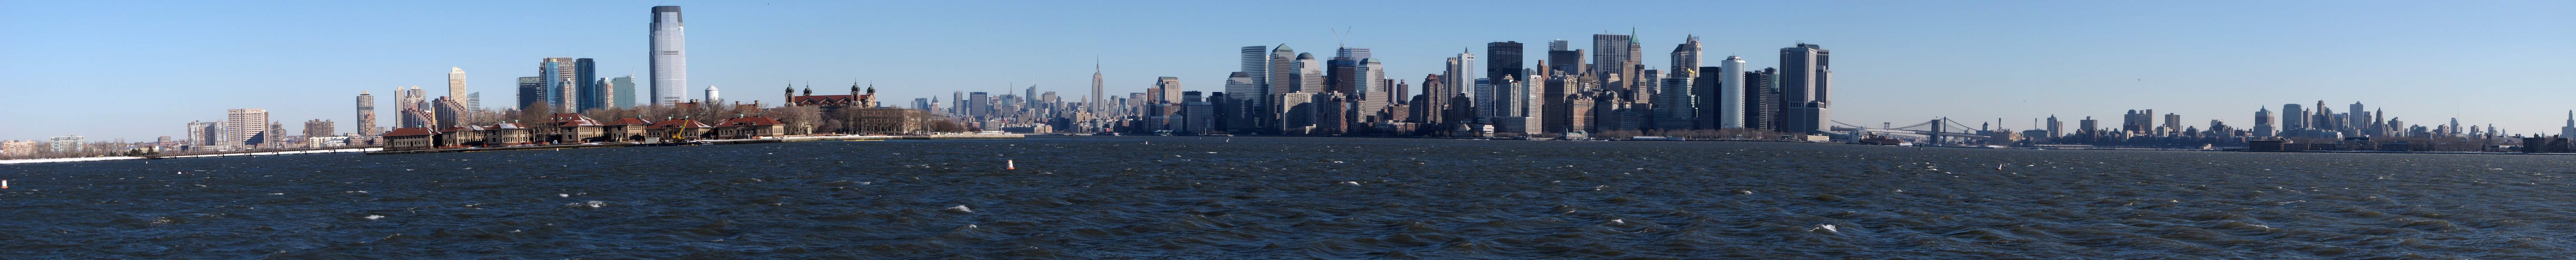 Liberty Island Panorama